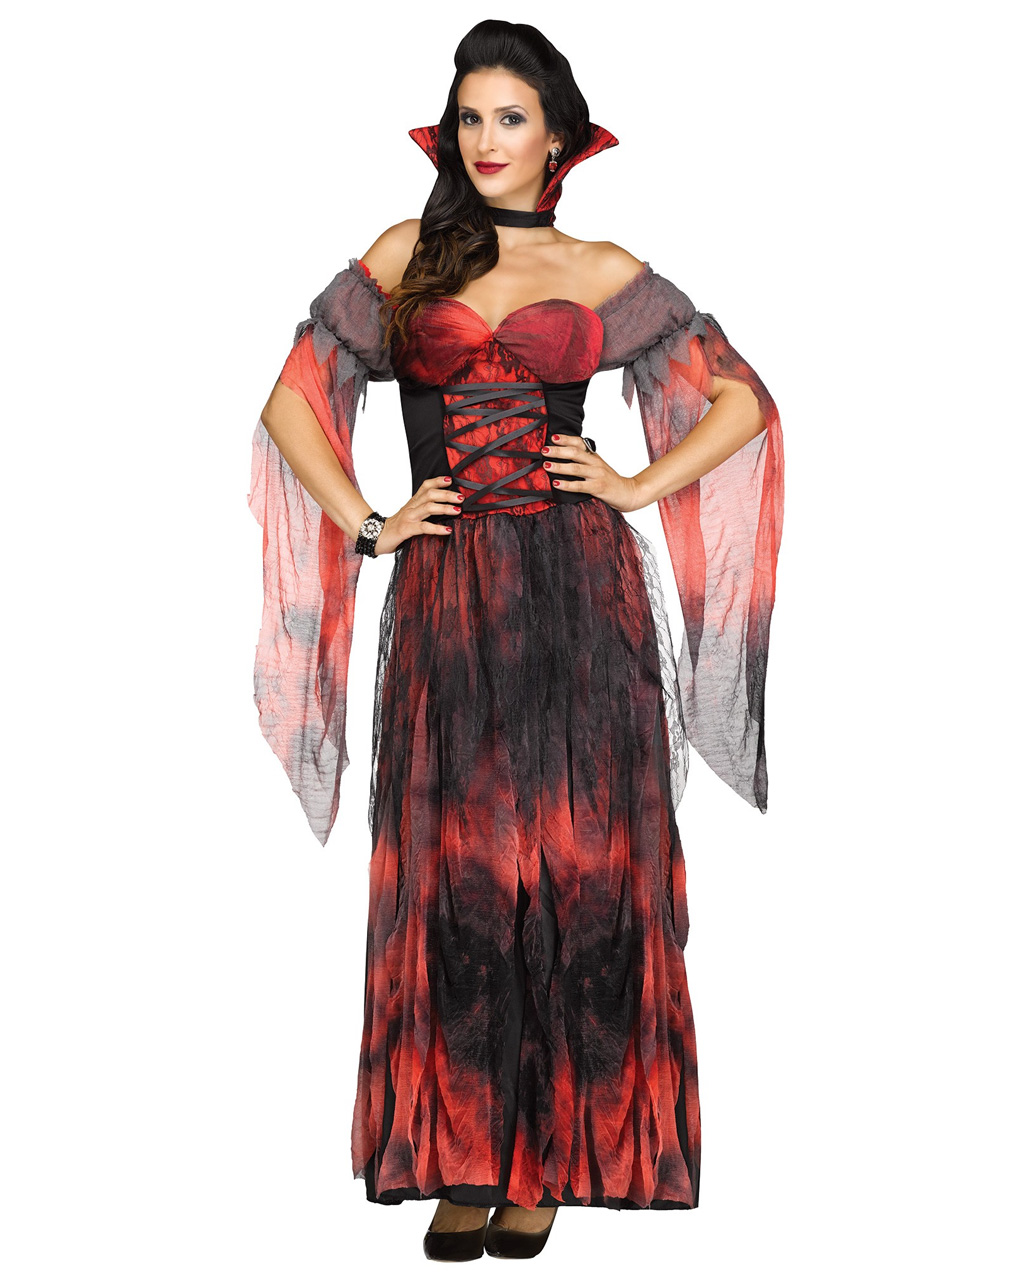 Vampirumhang mit Stehkragen Halloween Kostüm Damen rot-schwarz kurzes Vampir 